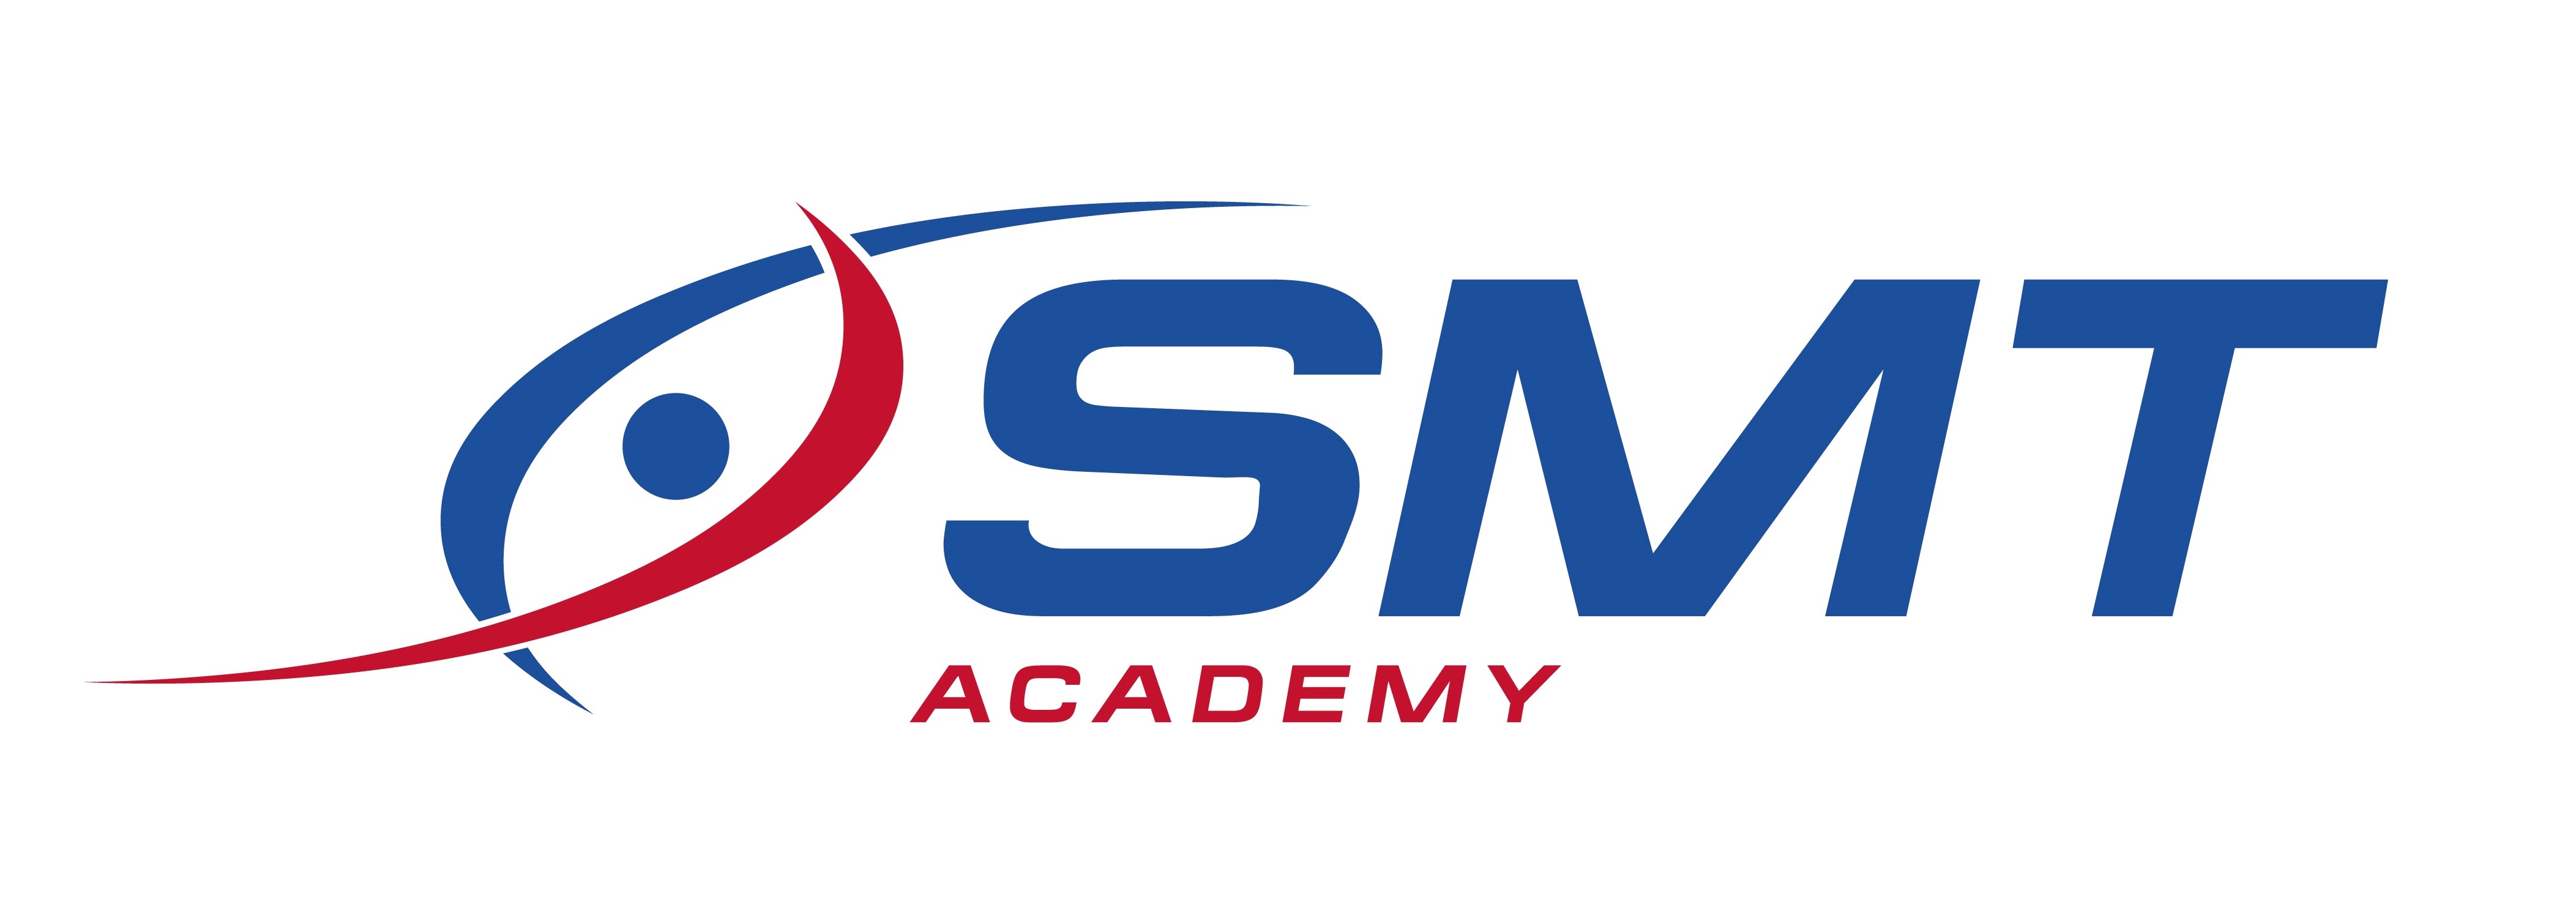 SMT Academy